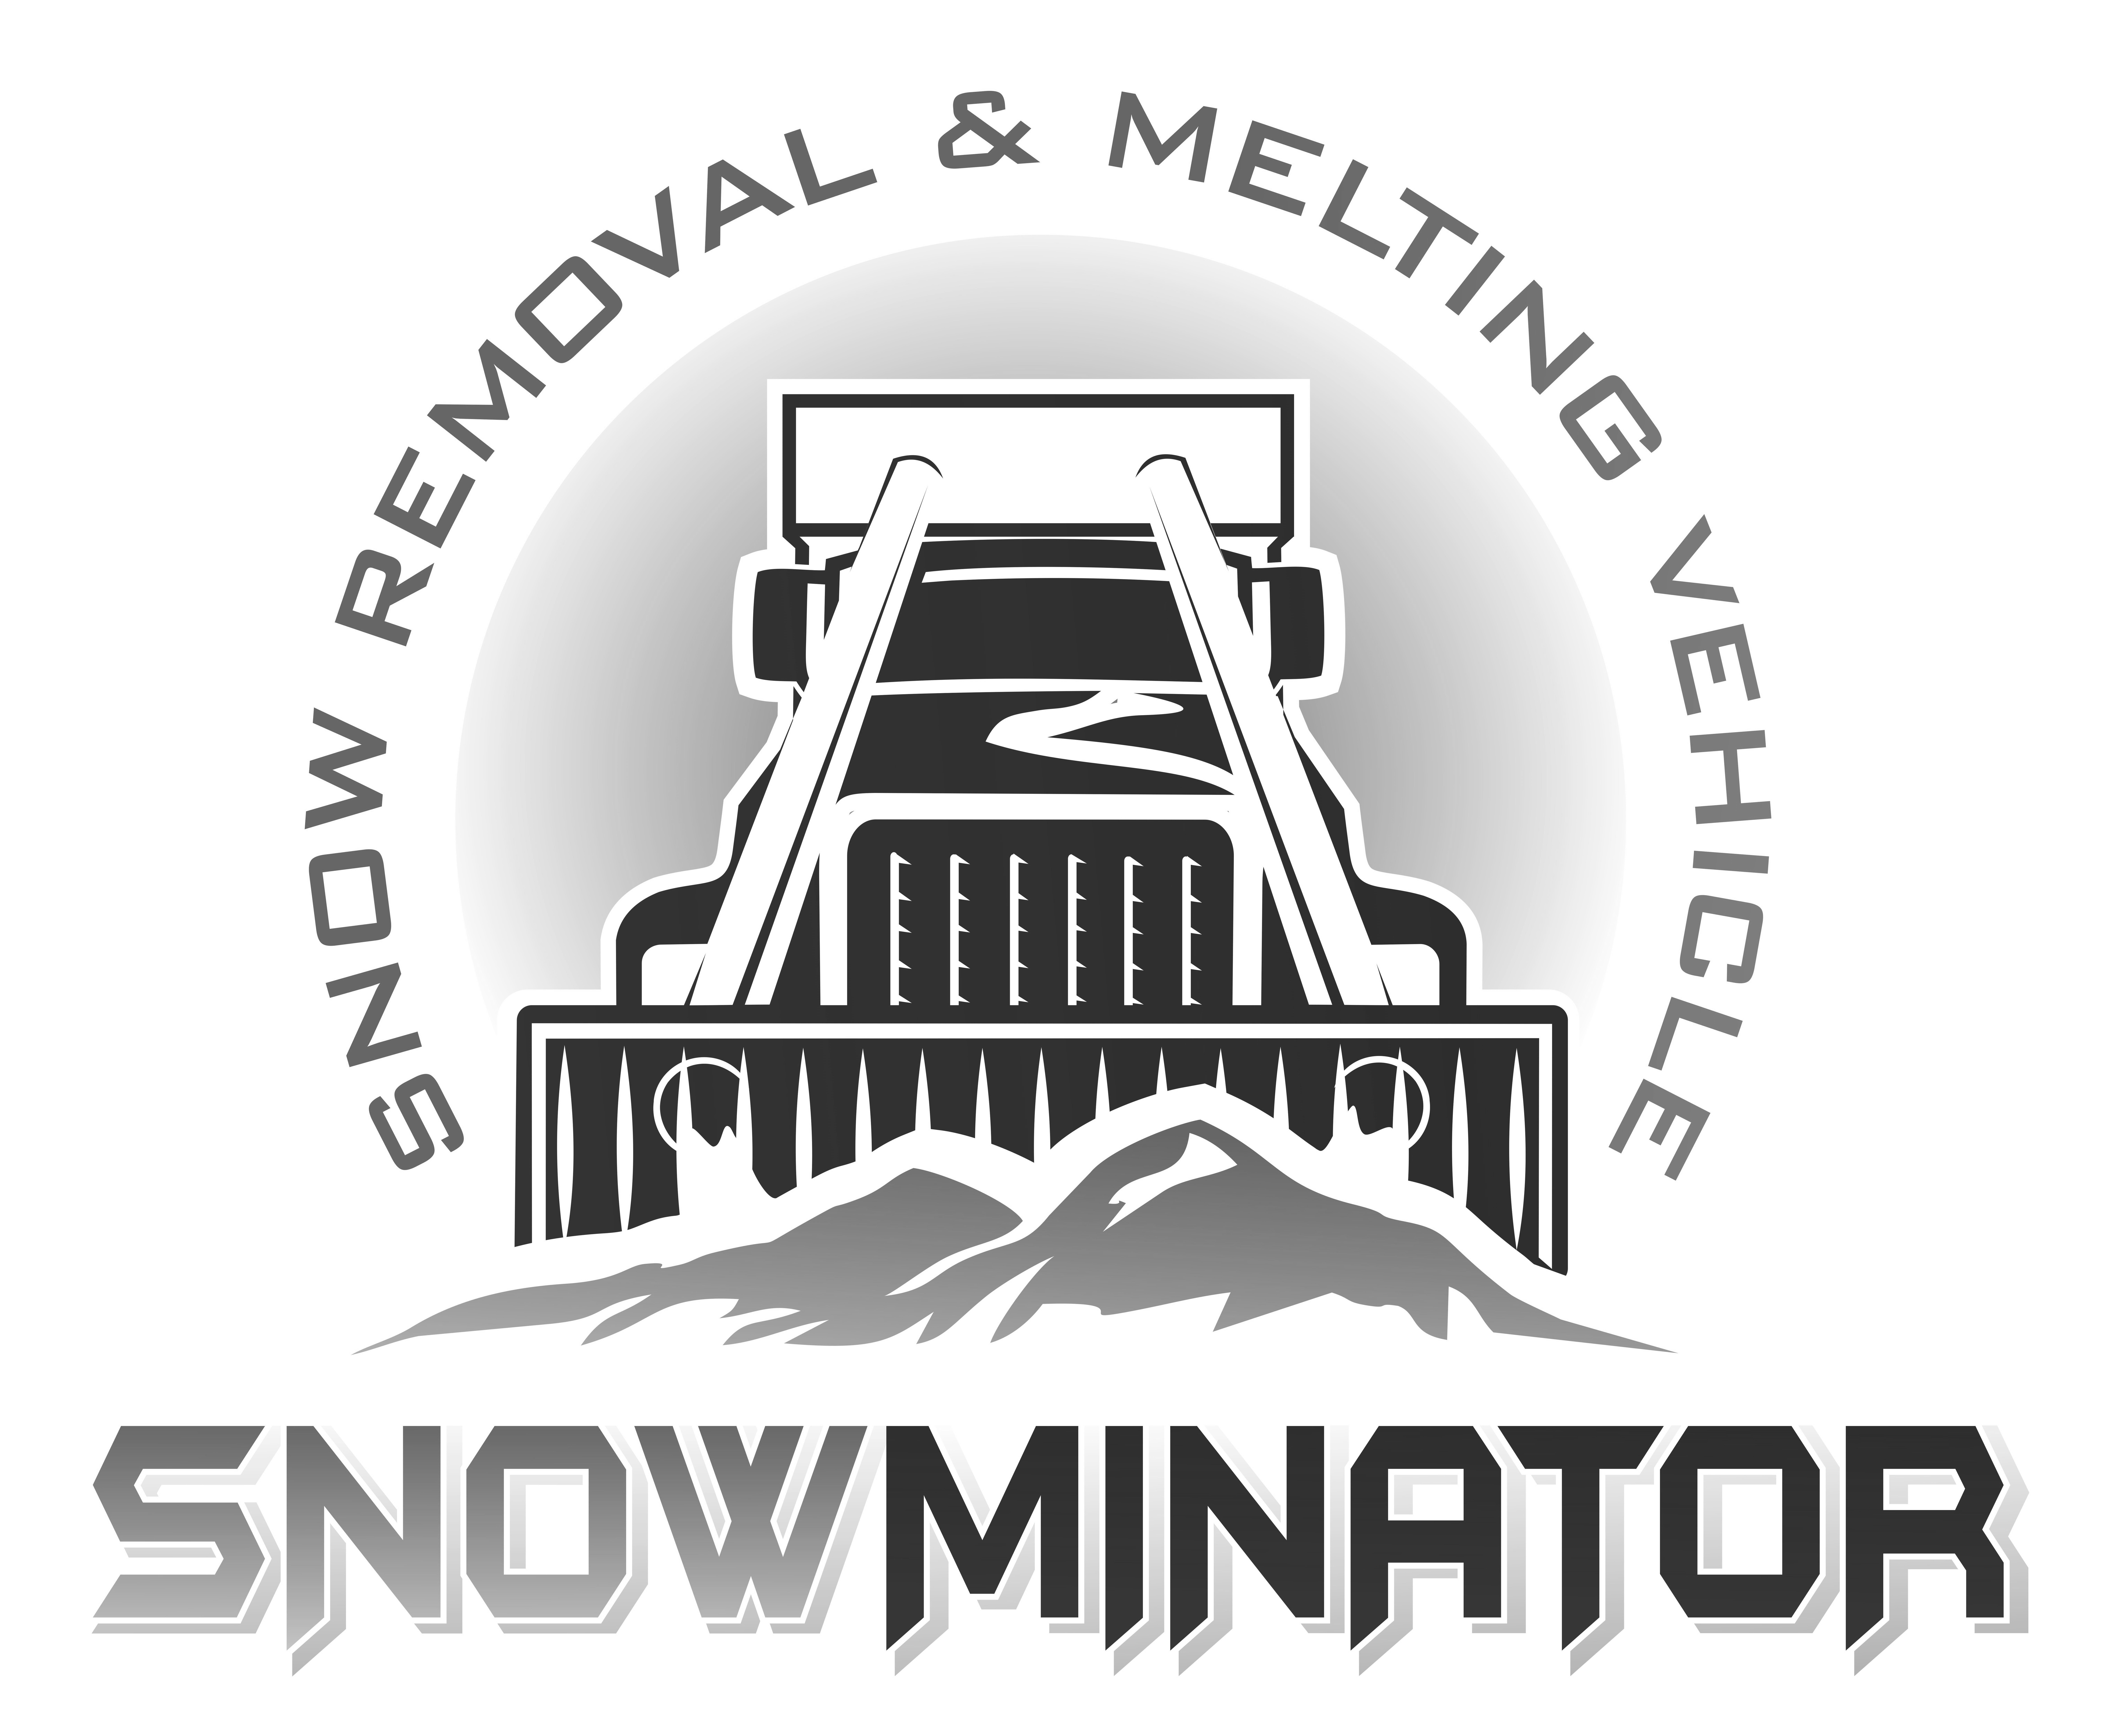 SNOWMINATOR SNOW REMOVAL & MELTING VEHICLE